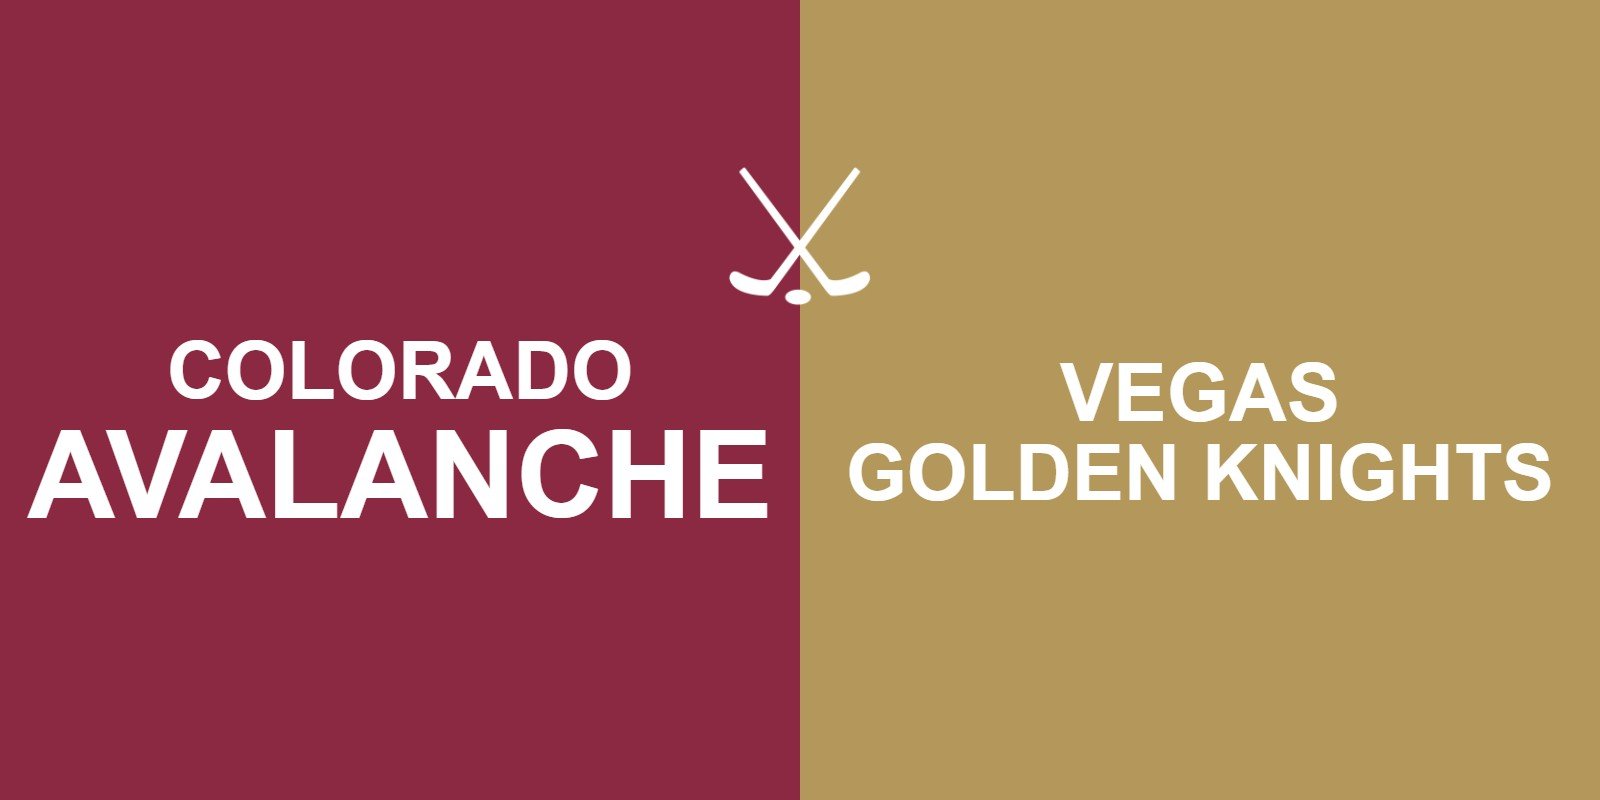 Avalanche vs Golden Knights